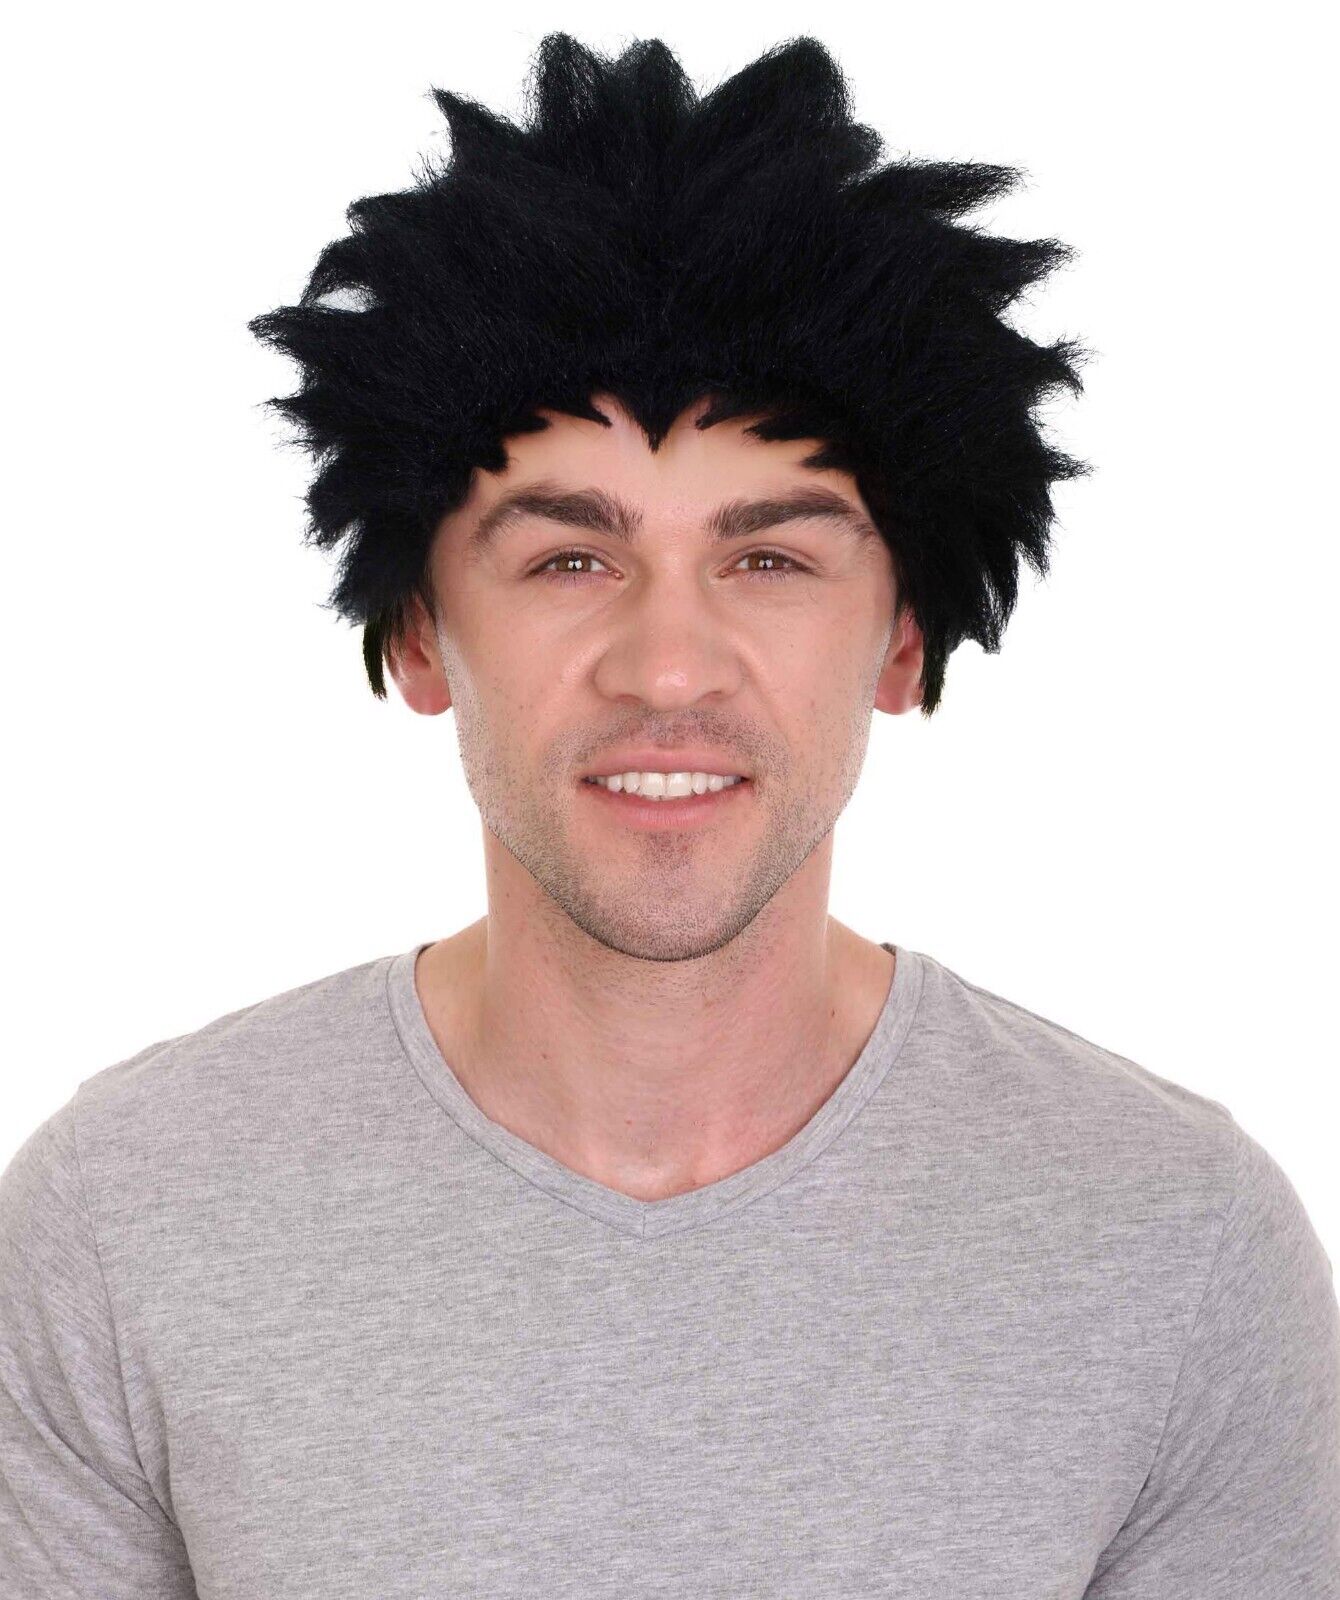 HPO Adult Men's Anime Spiky Black Wig, Best for Halloween,HM-1618